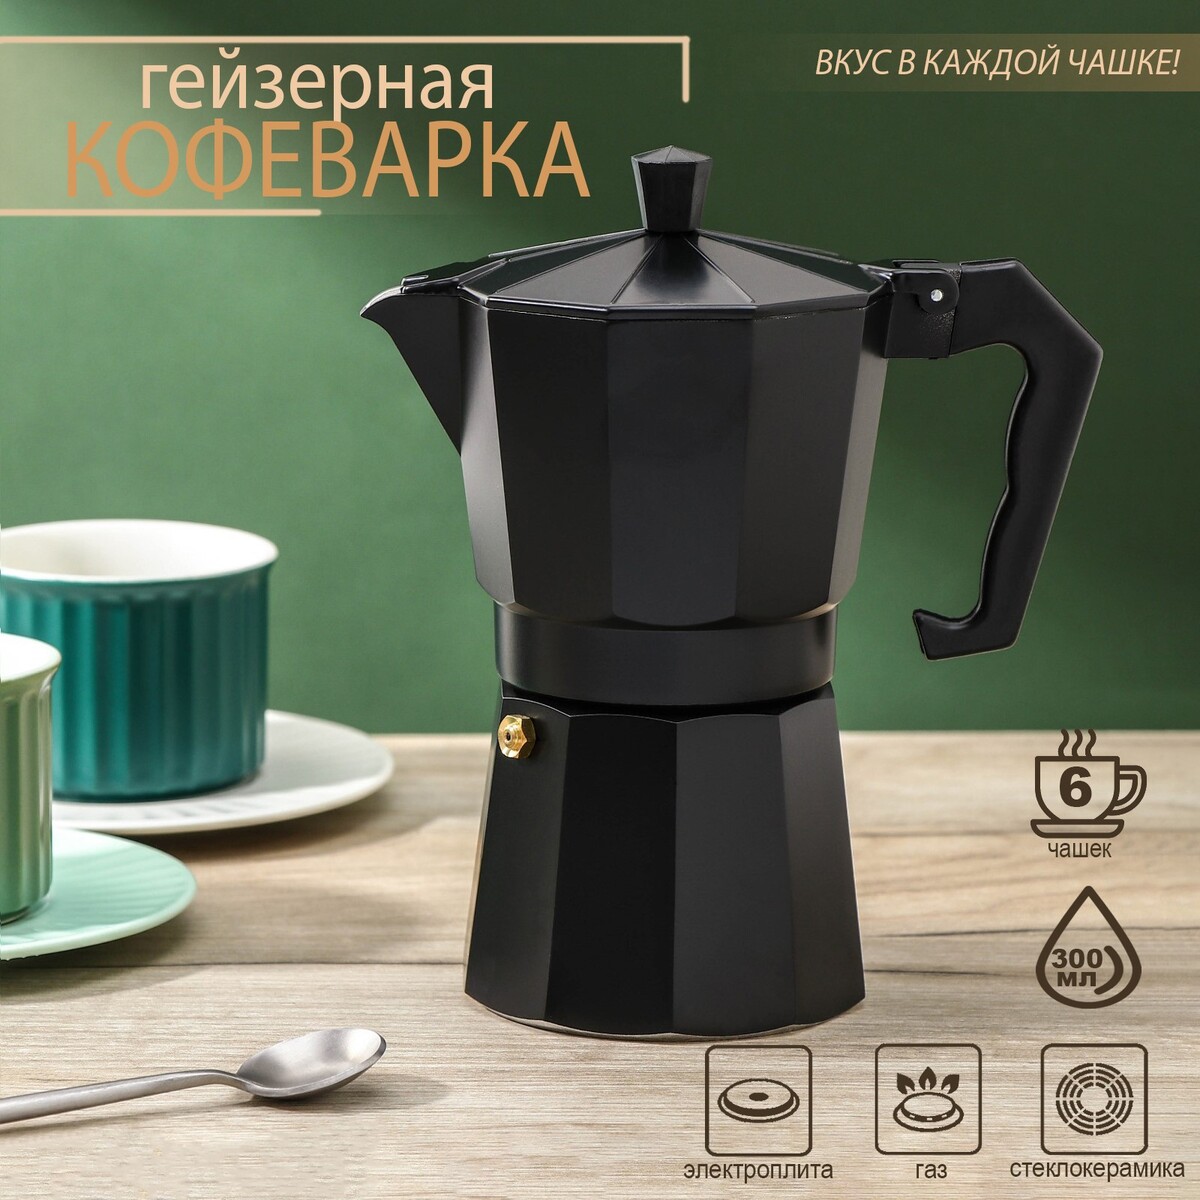 Кофеварка гейзерная доляна alum black, на 6 чашек, 300 мл кофеварка гейзерная kelli kl 3017